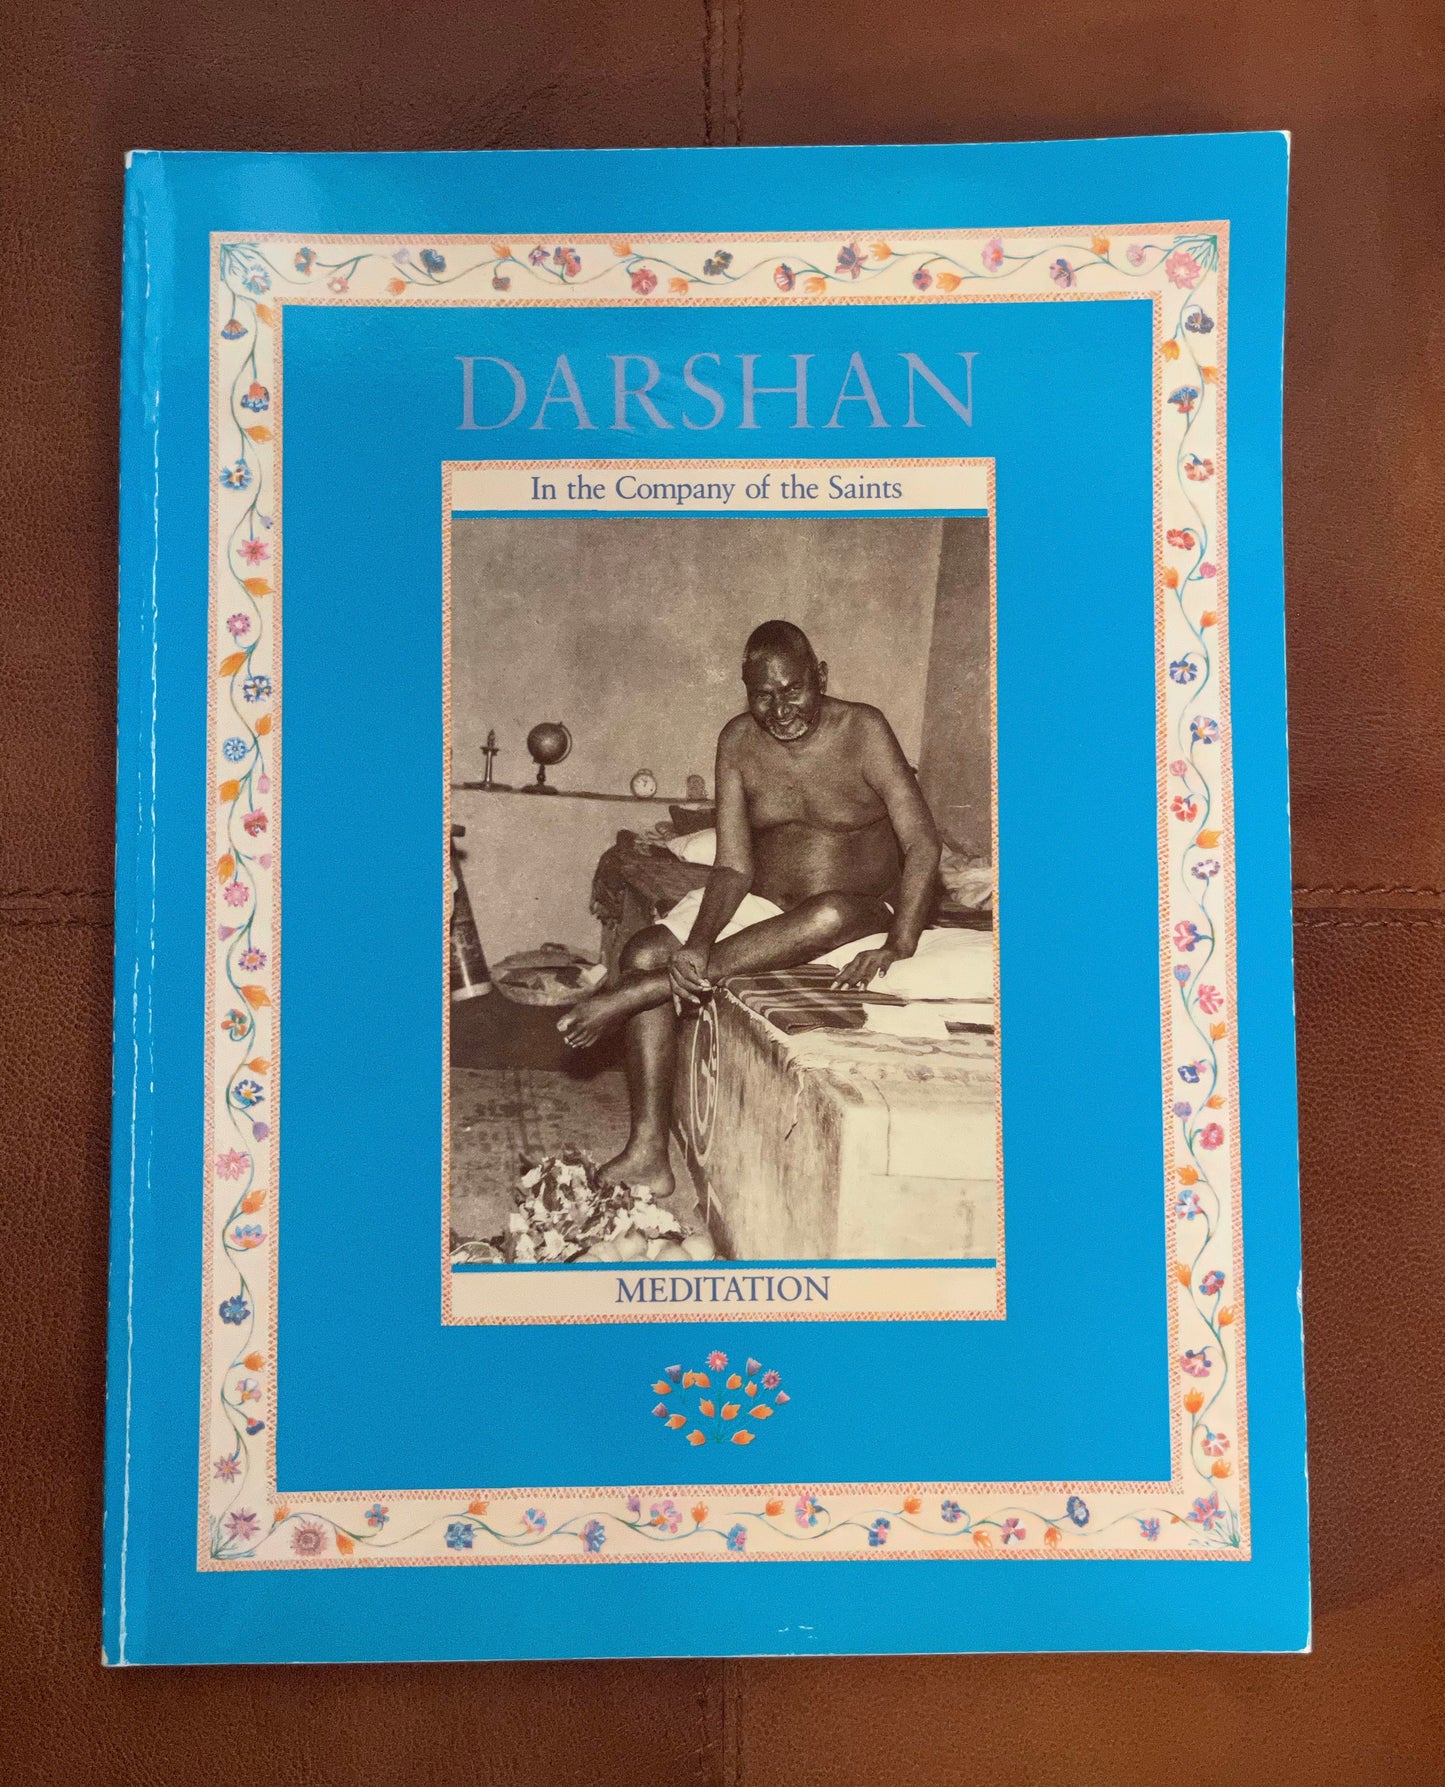 Darshan Magazine, In The Company of The Saints, Meditation